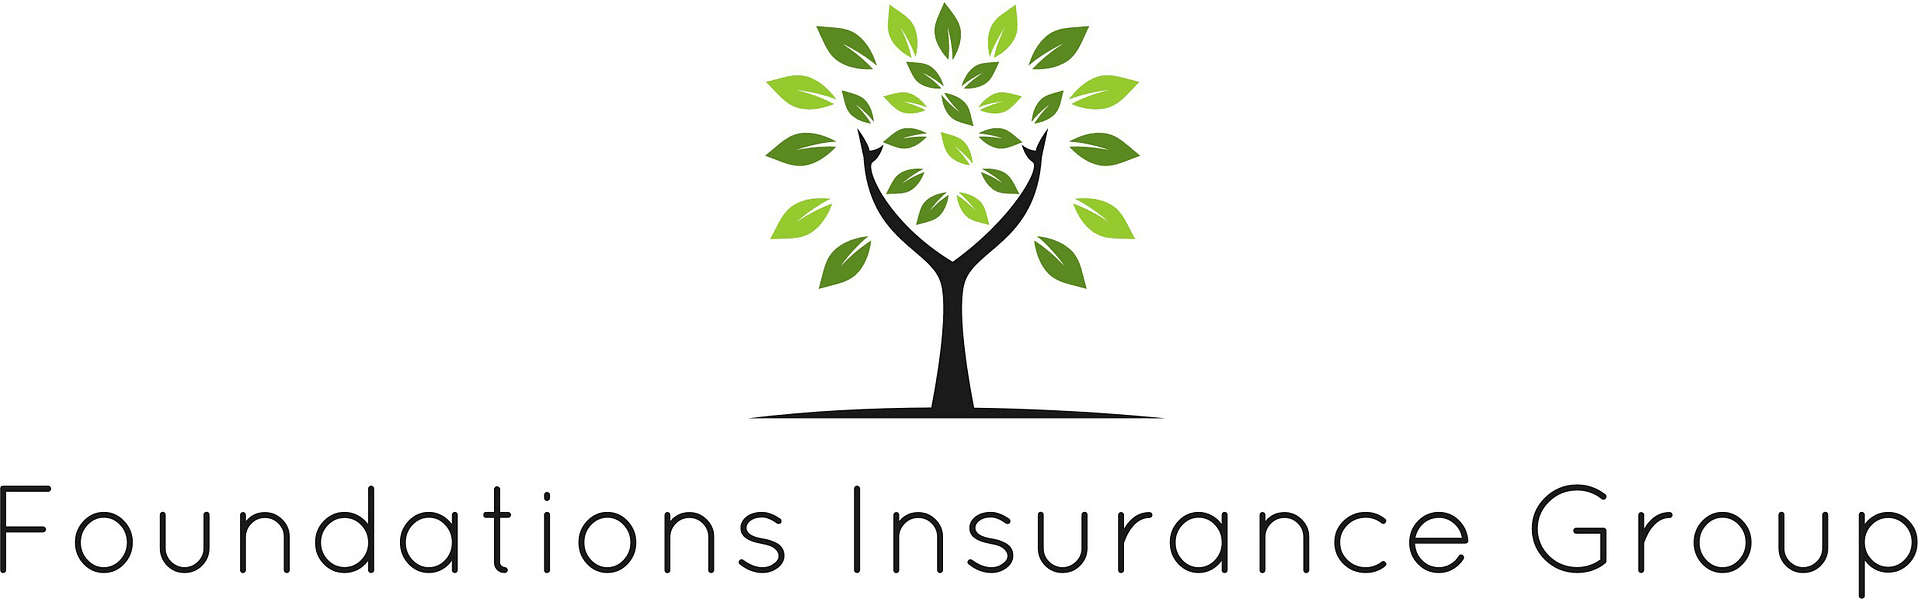 foundations-insurance-group-logo-2